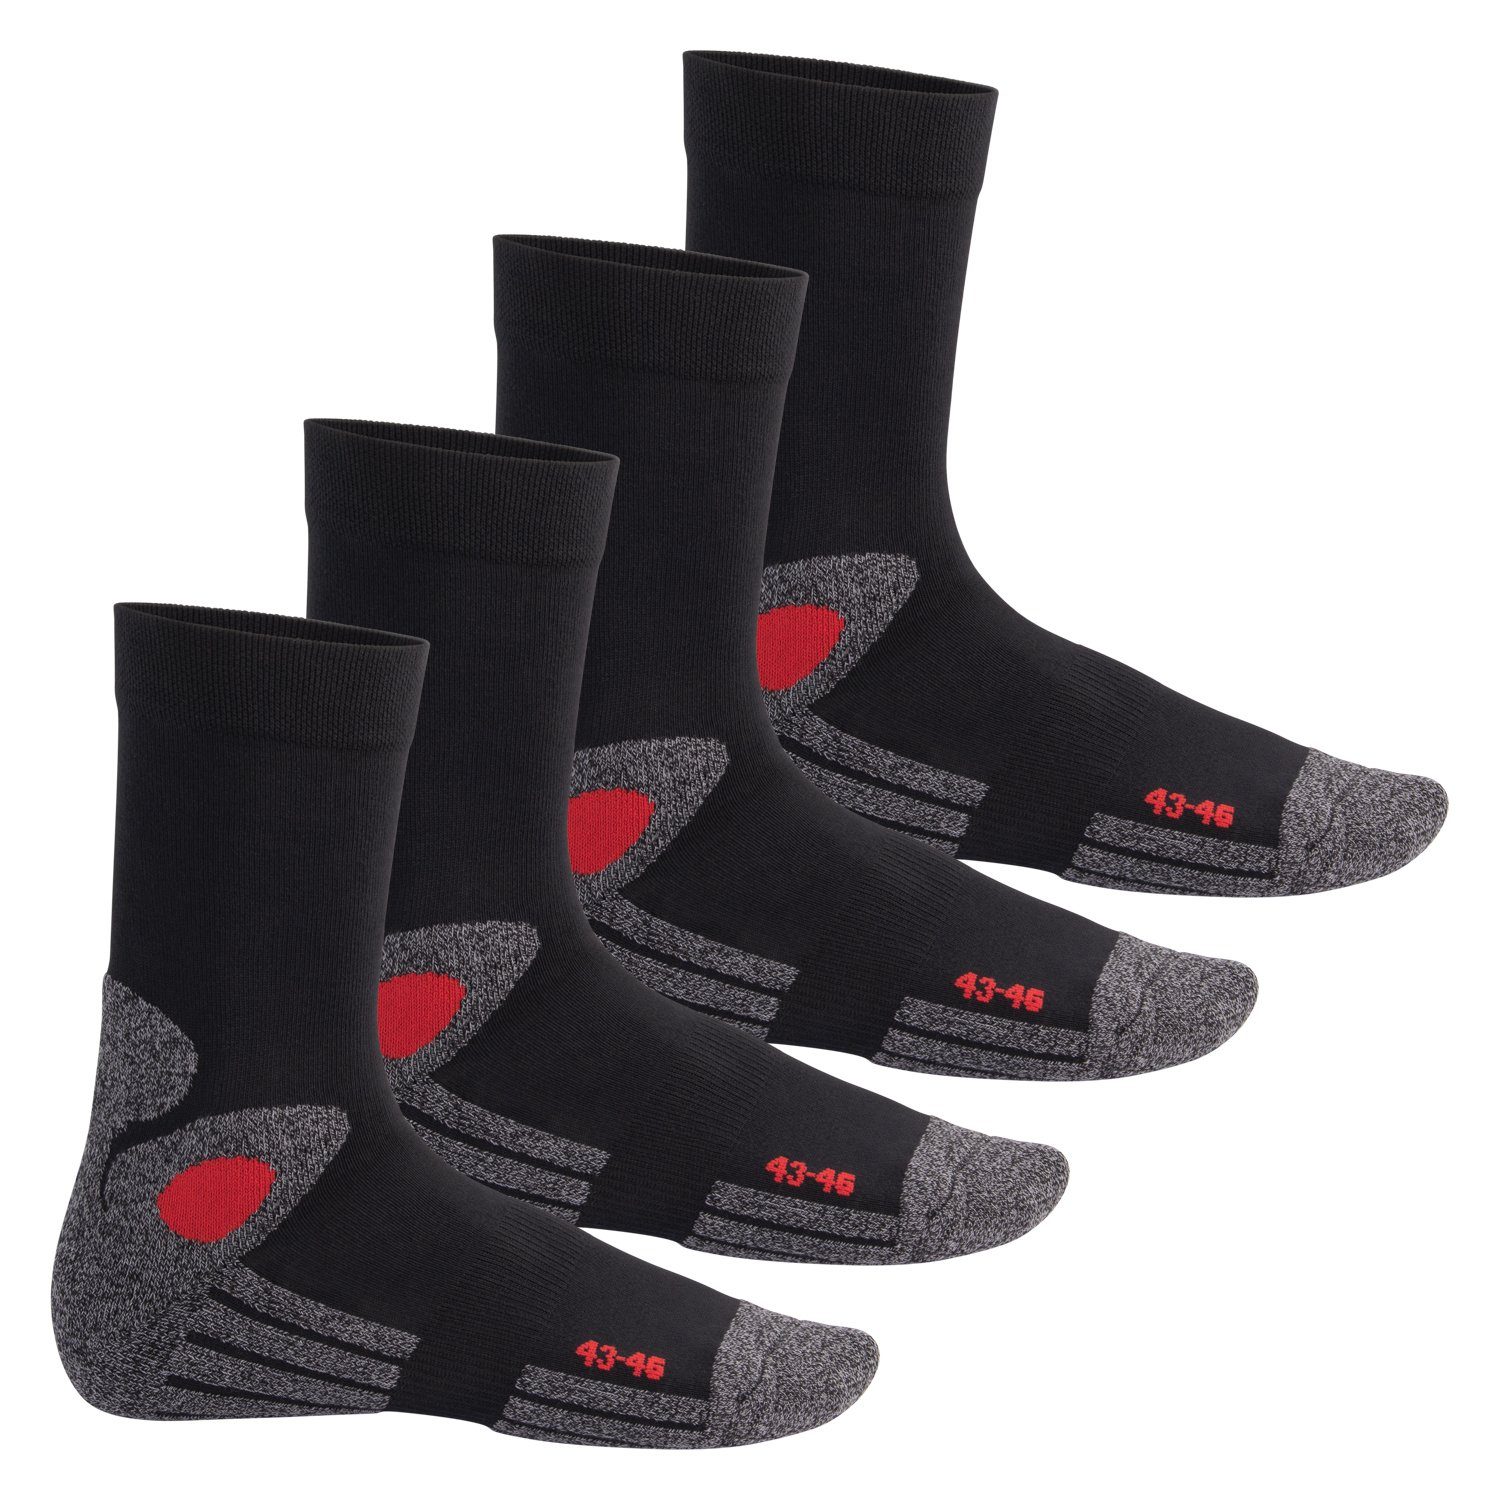 celodoro Arbeitssocken Trekking-Socken für Damen & Herren (4 Paar) mit Frotteesohle Schwarz / Rot